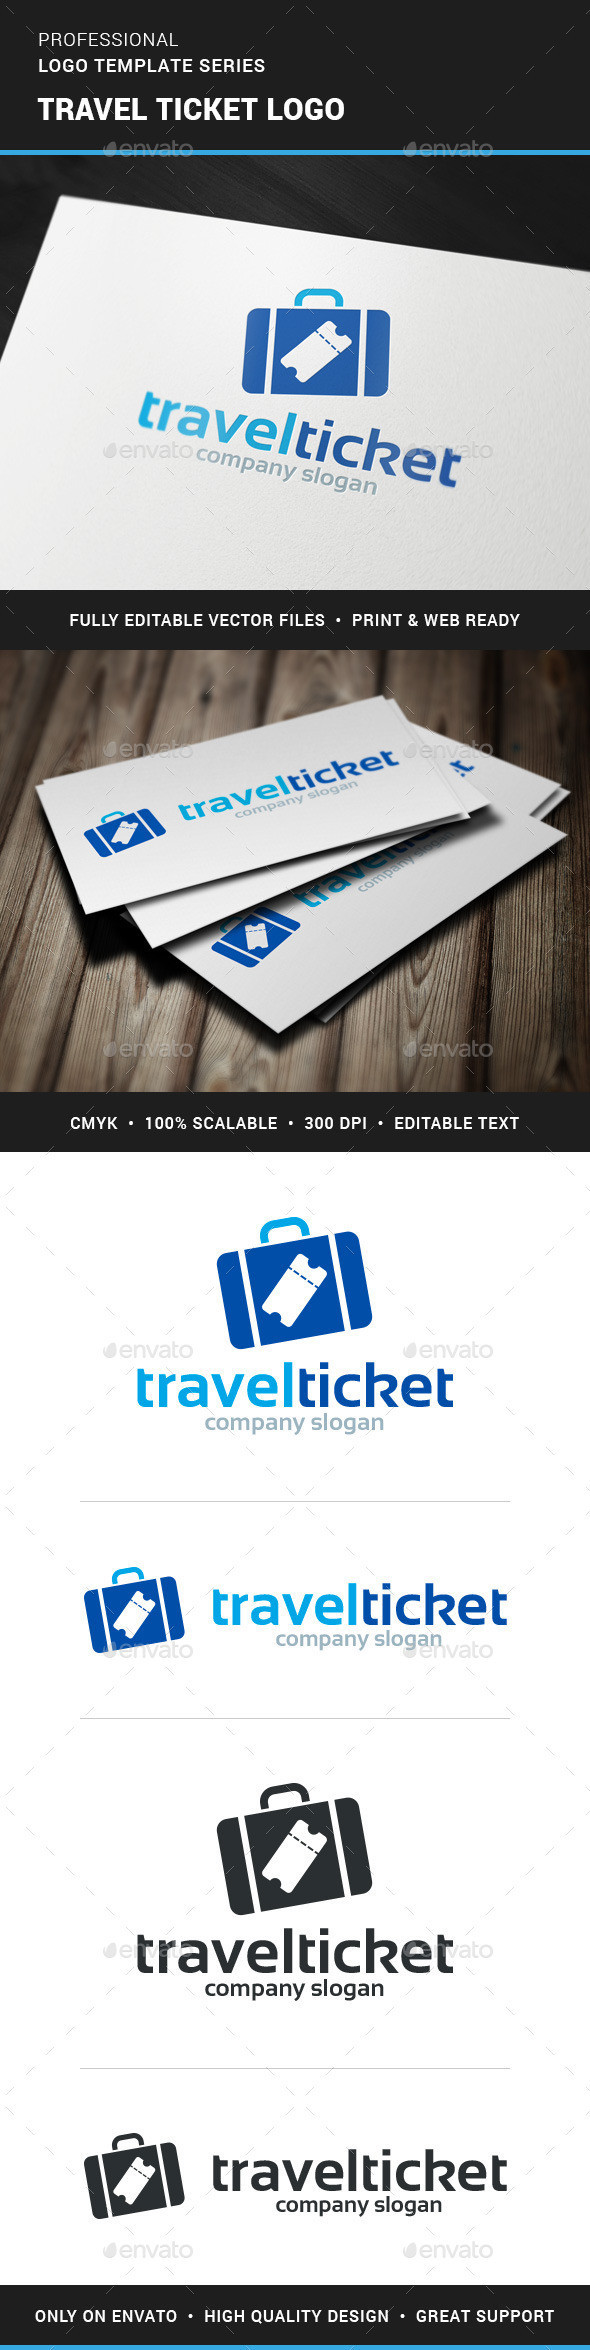 Travel tickets logo